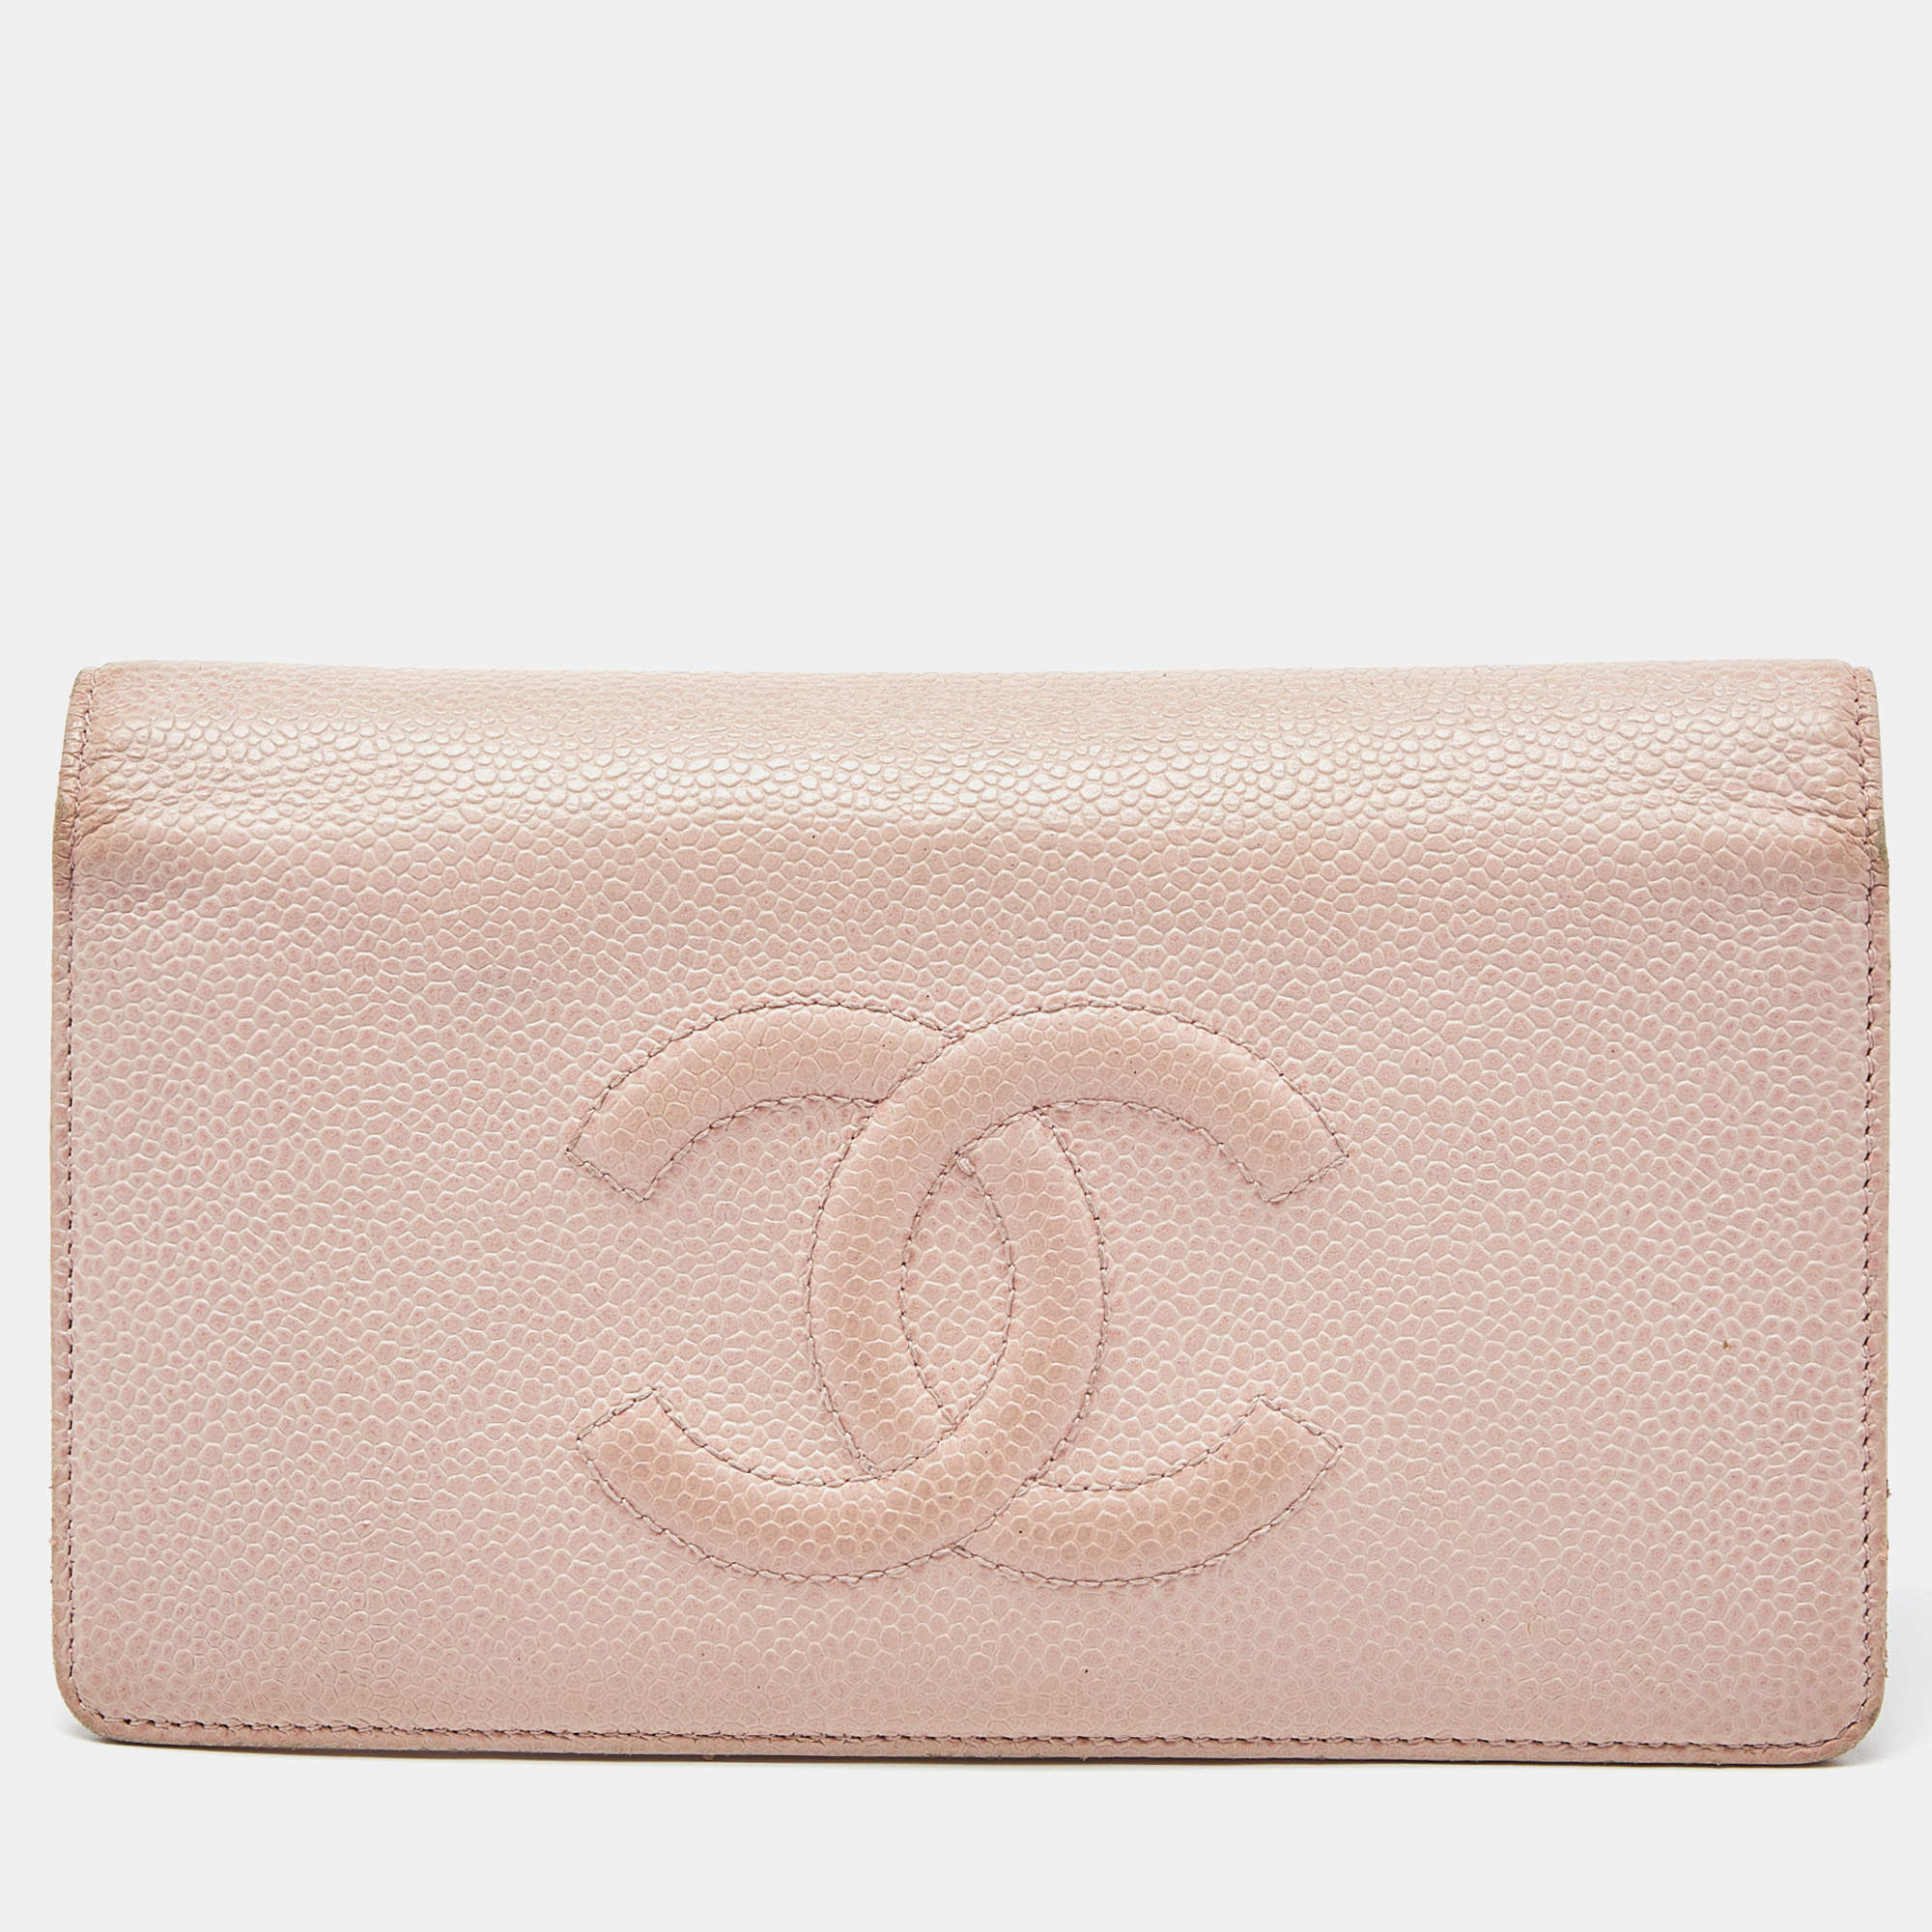 Chanel Boy's Zippy Compact Wallet